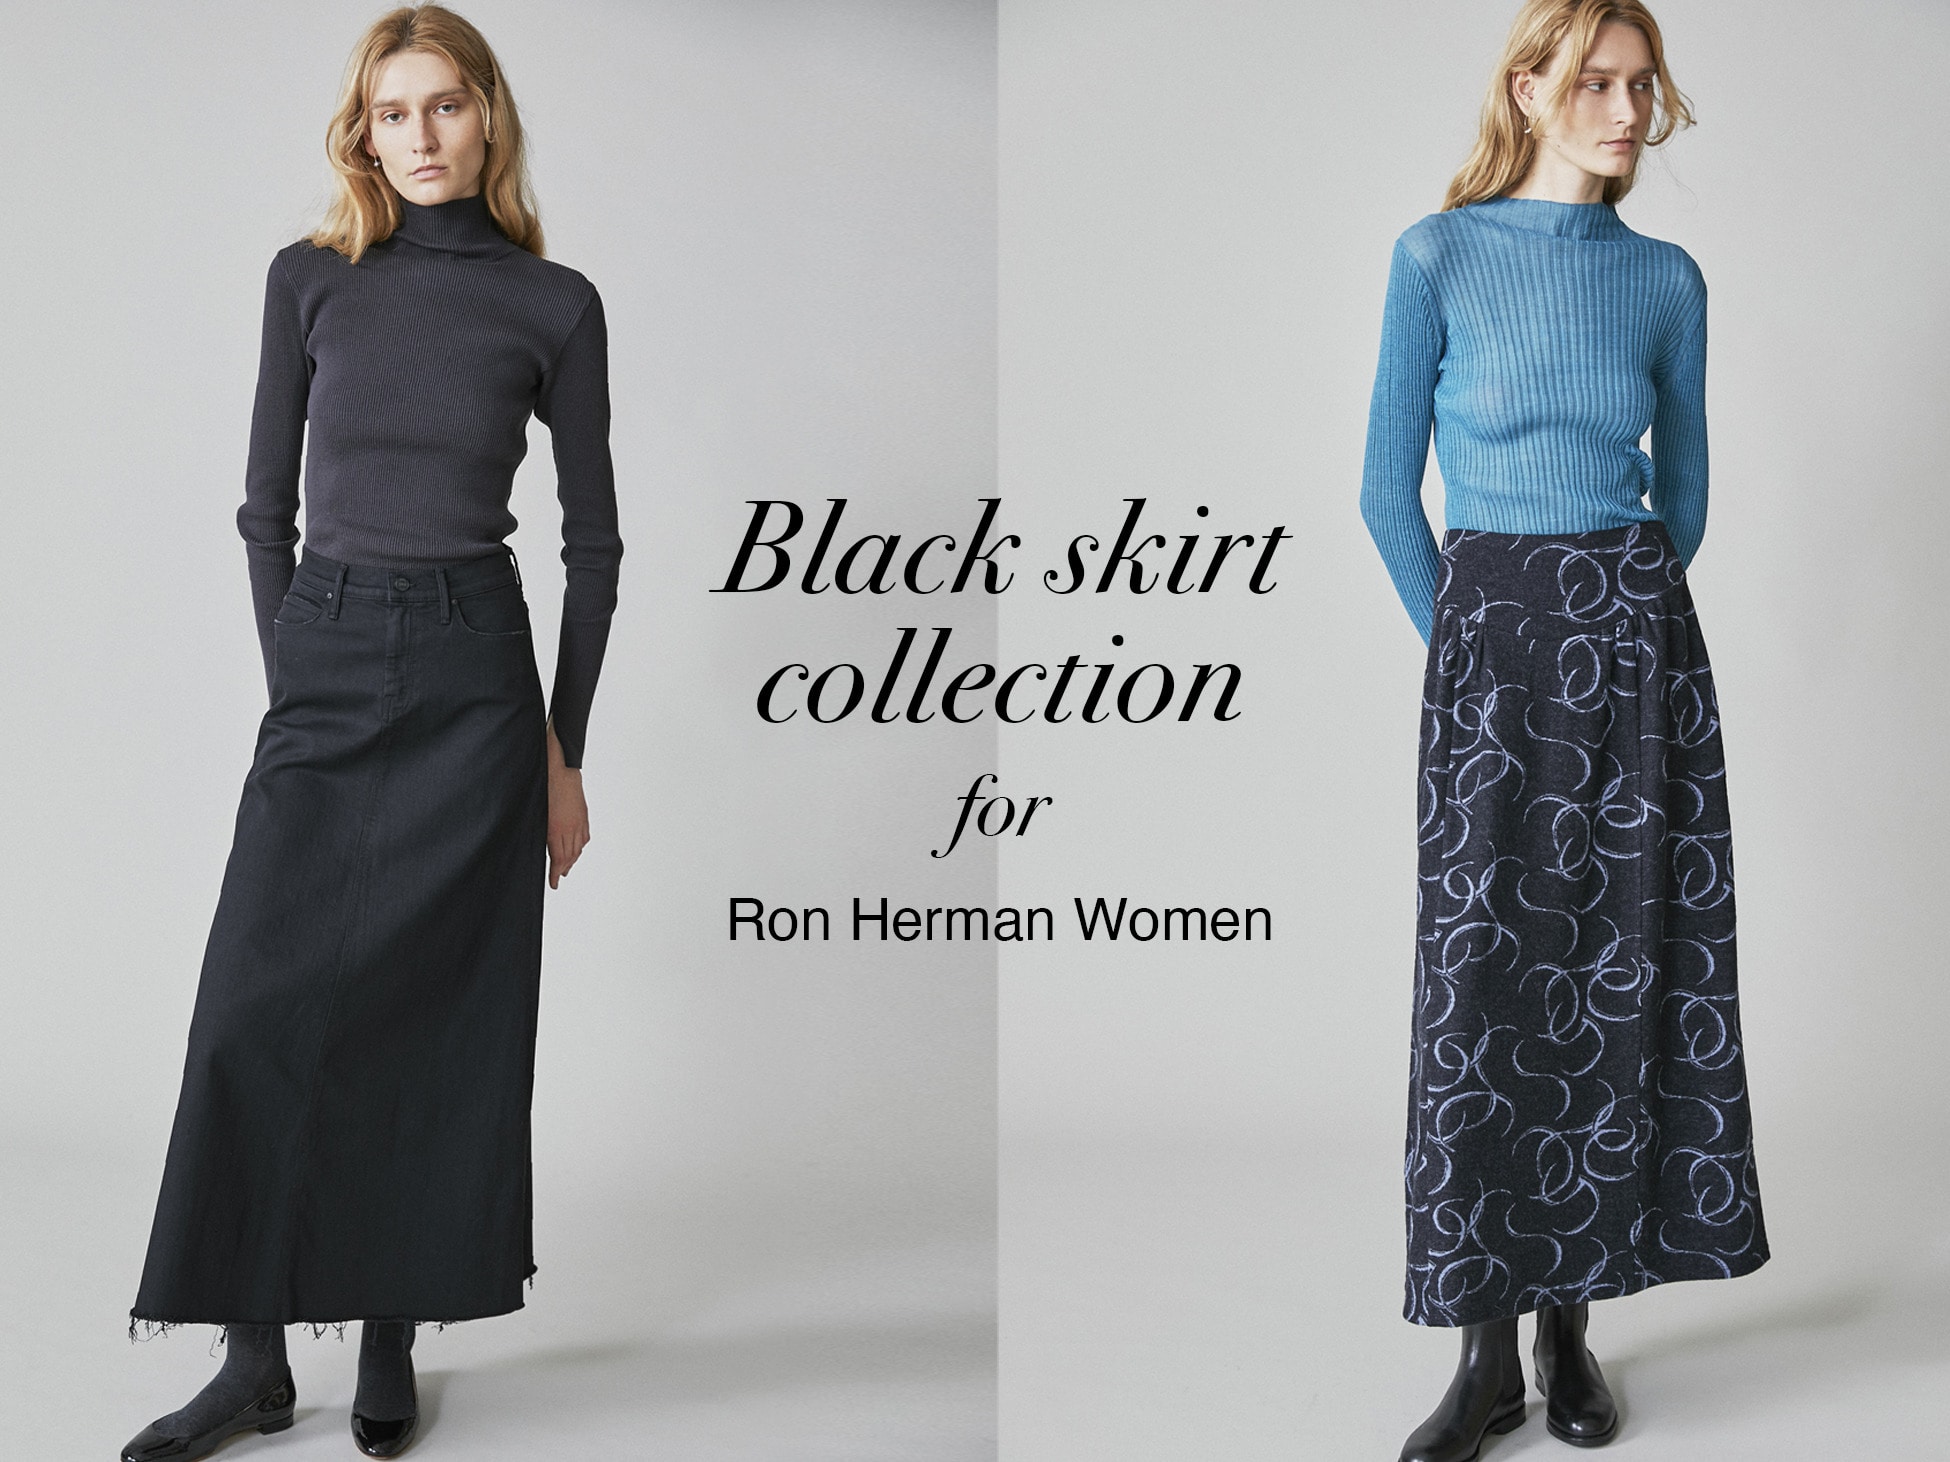 Black skirt collection for Ron Herman Women